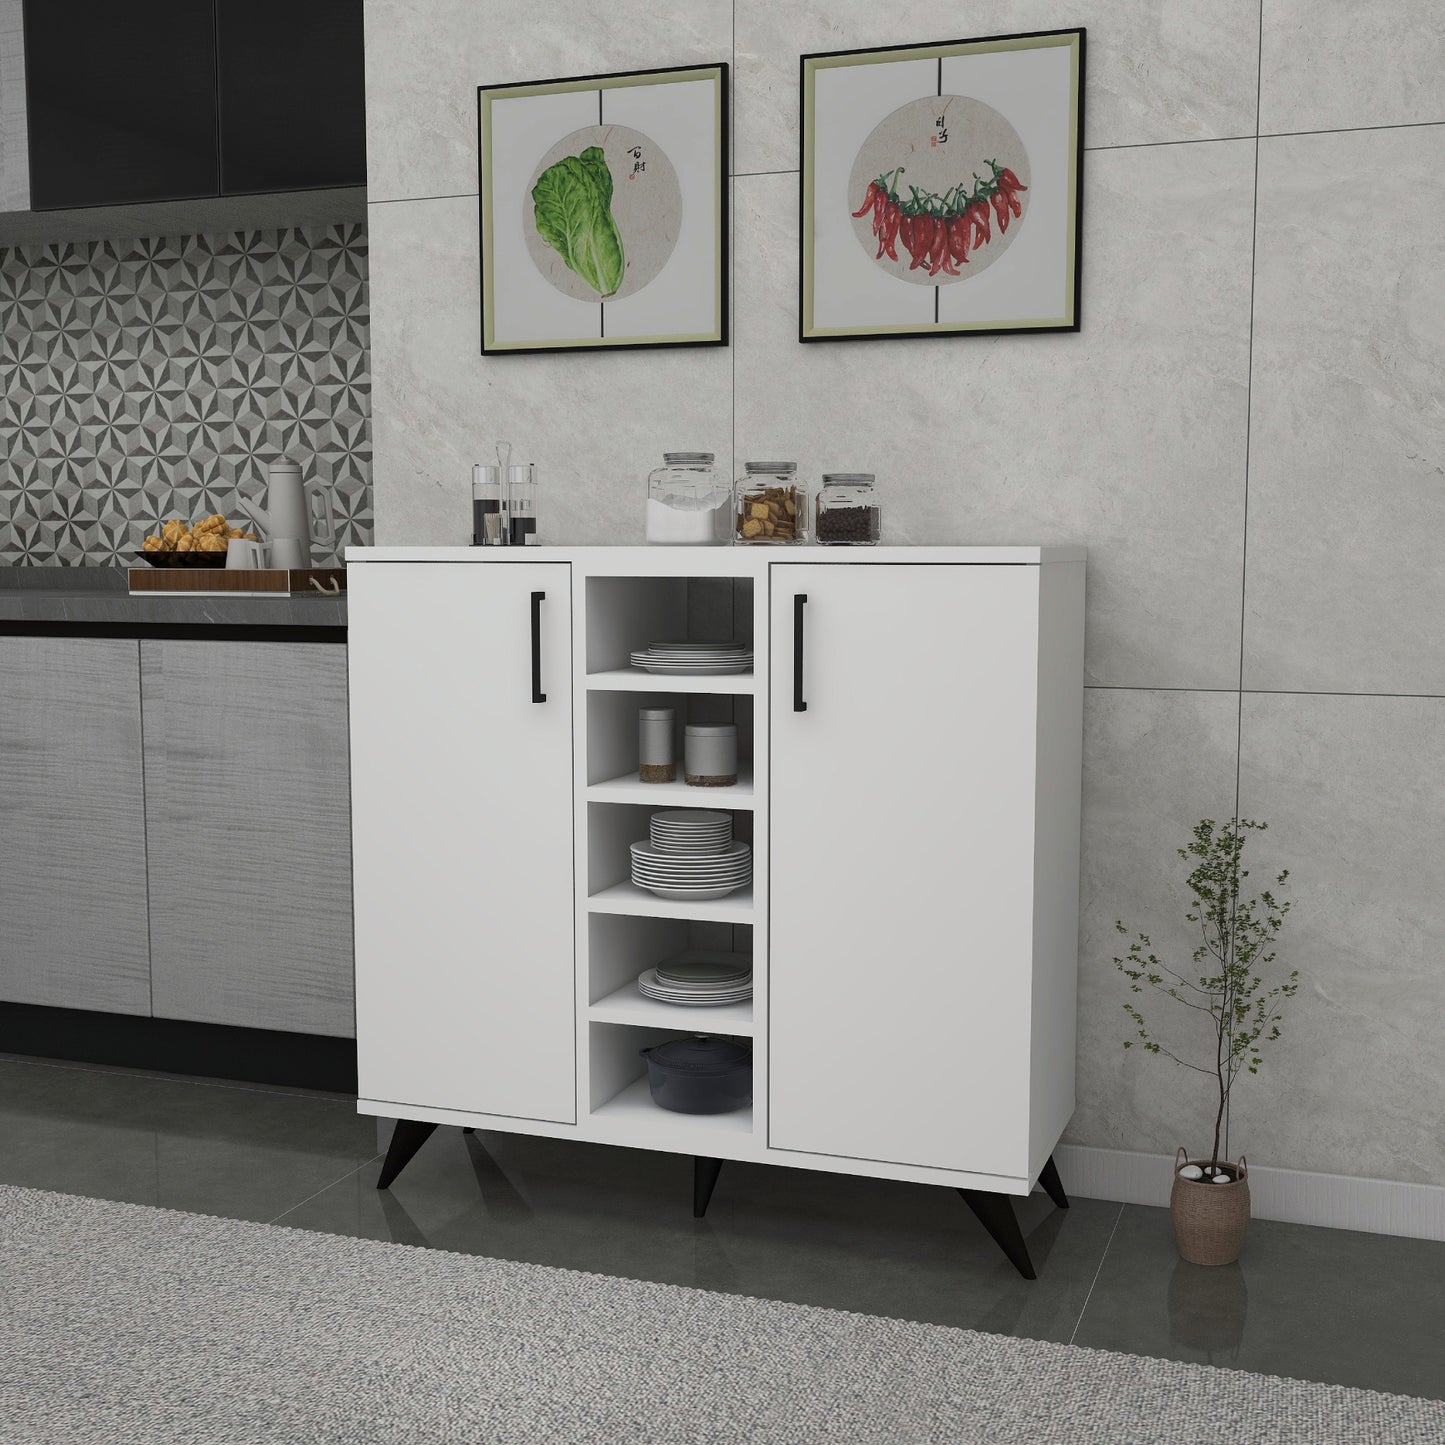 Leander Kitchen Cabinet with Shelves